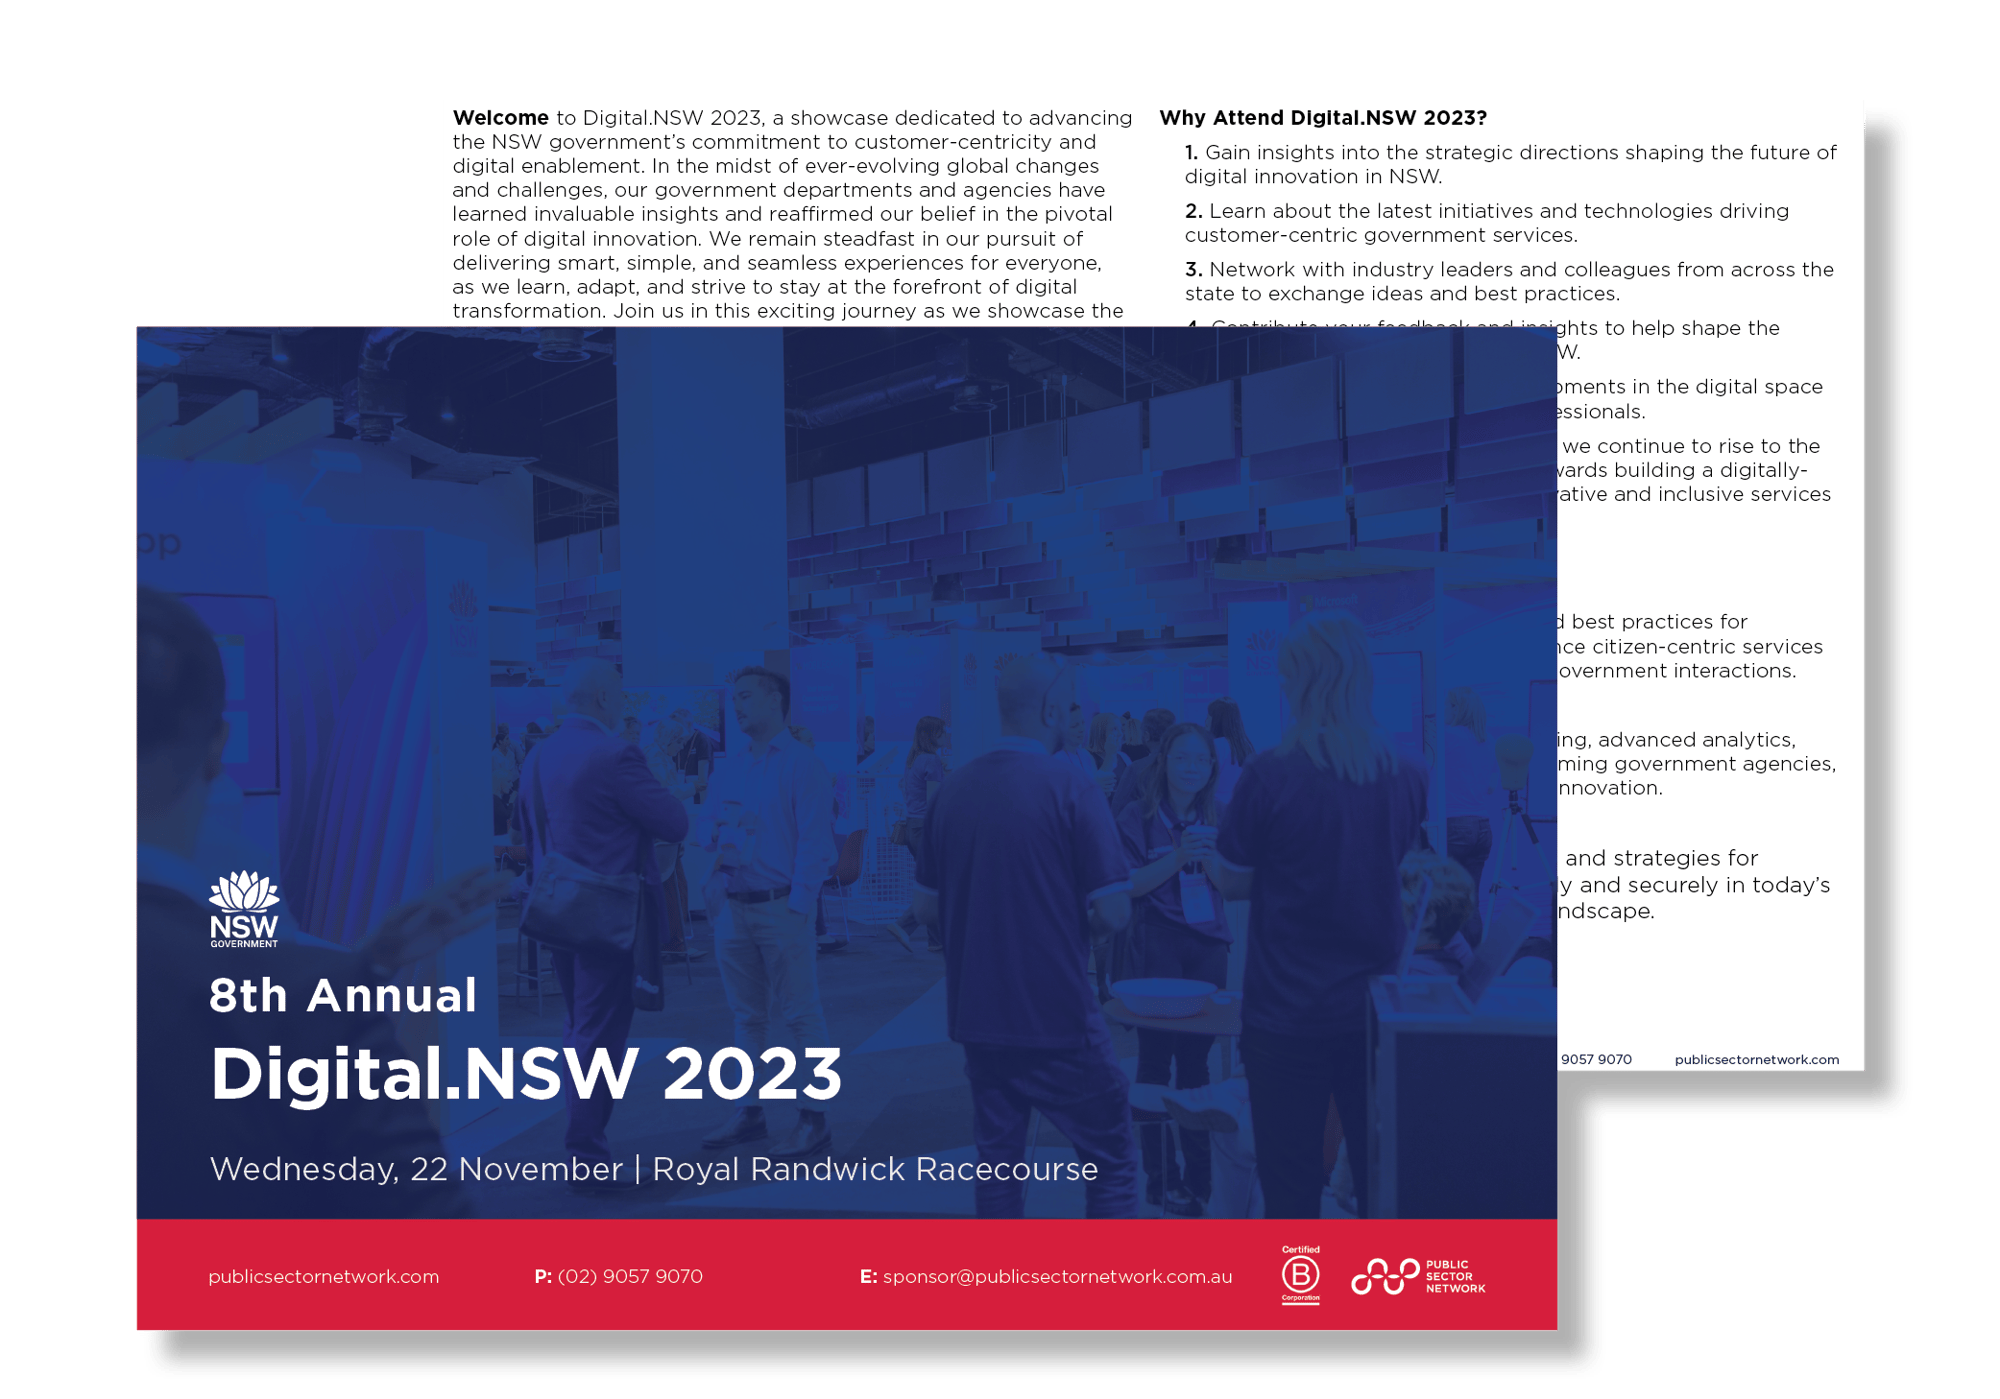 Digital.NSW 2023